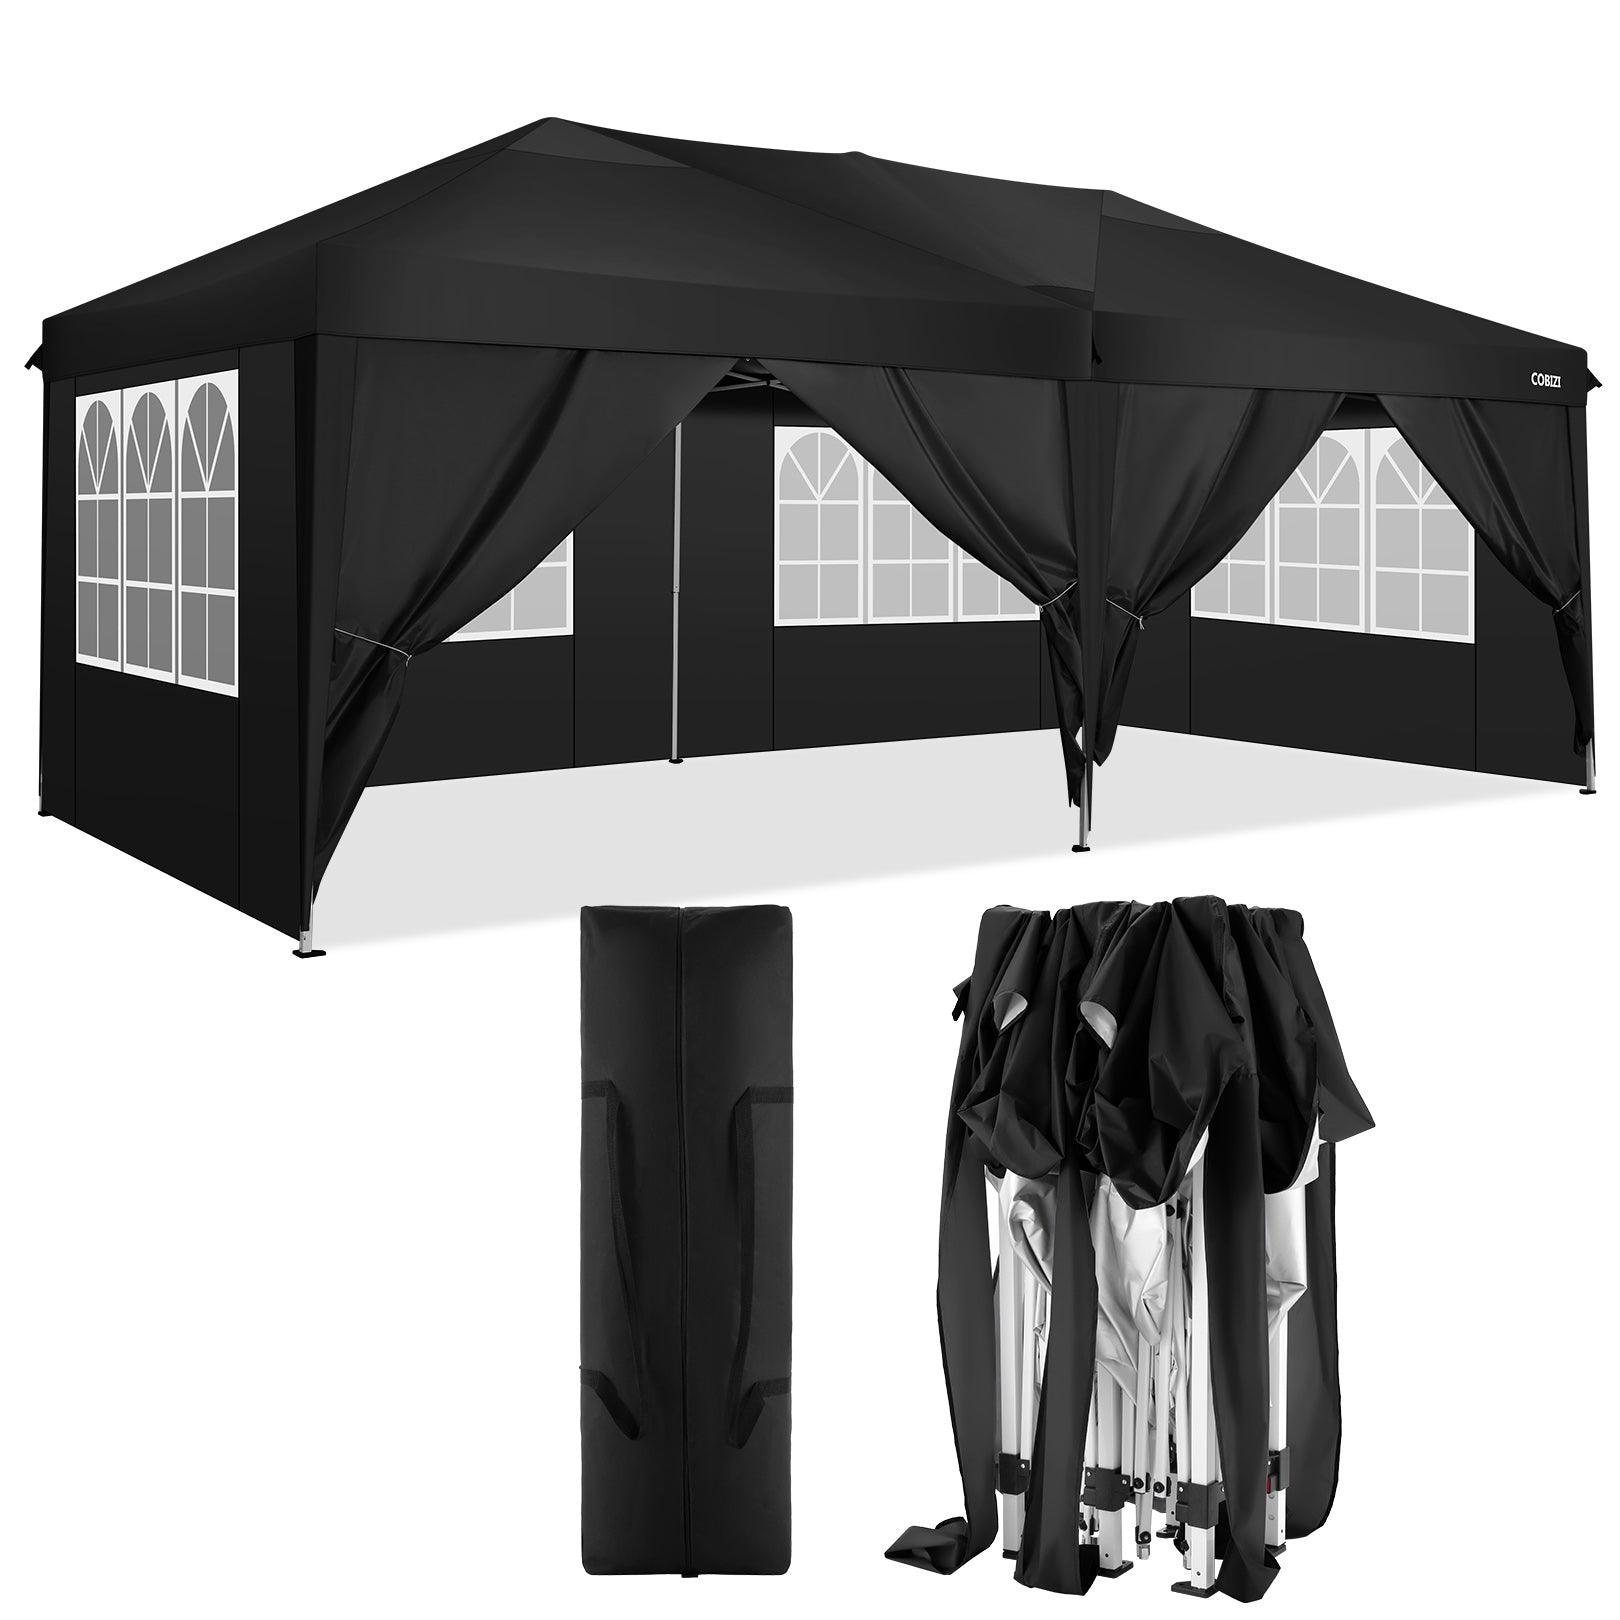 COBIZI Pop Up Canopy Large Party Tent Shelter 10'x20' with 6 Sidewalls - COBIZI